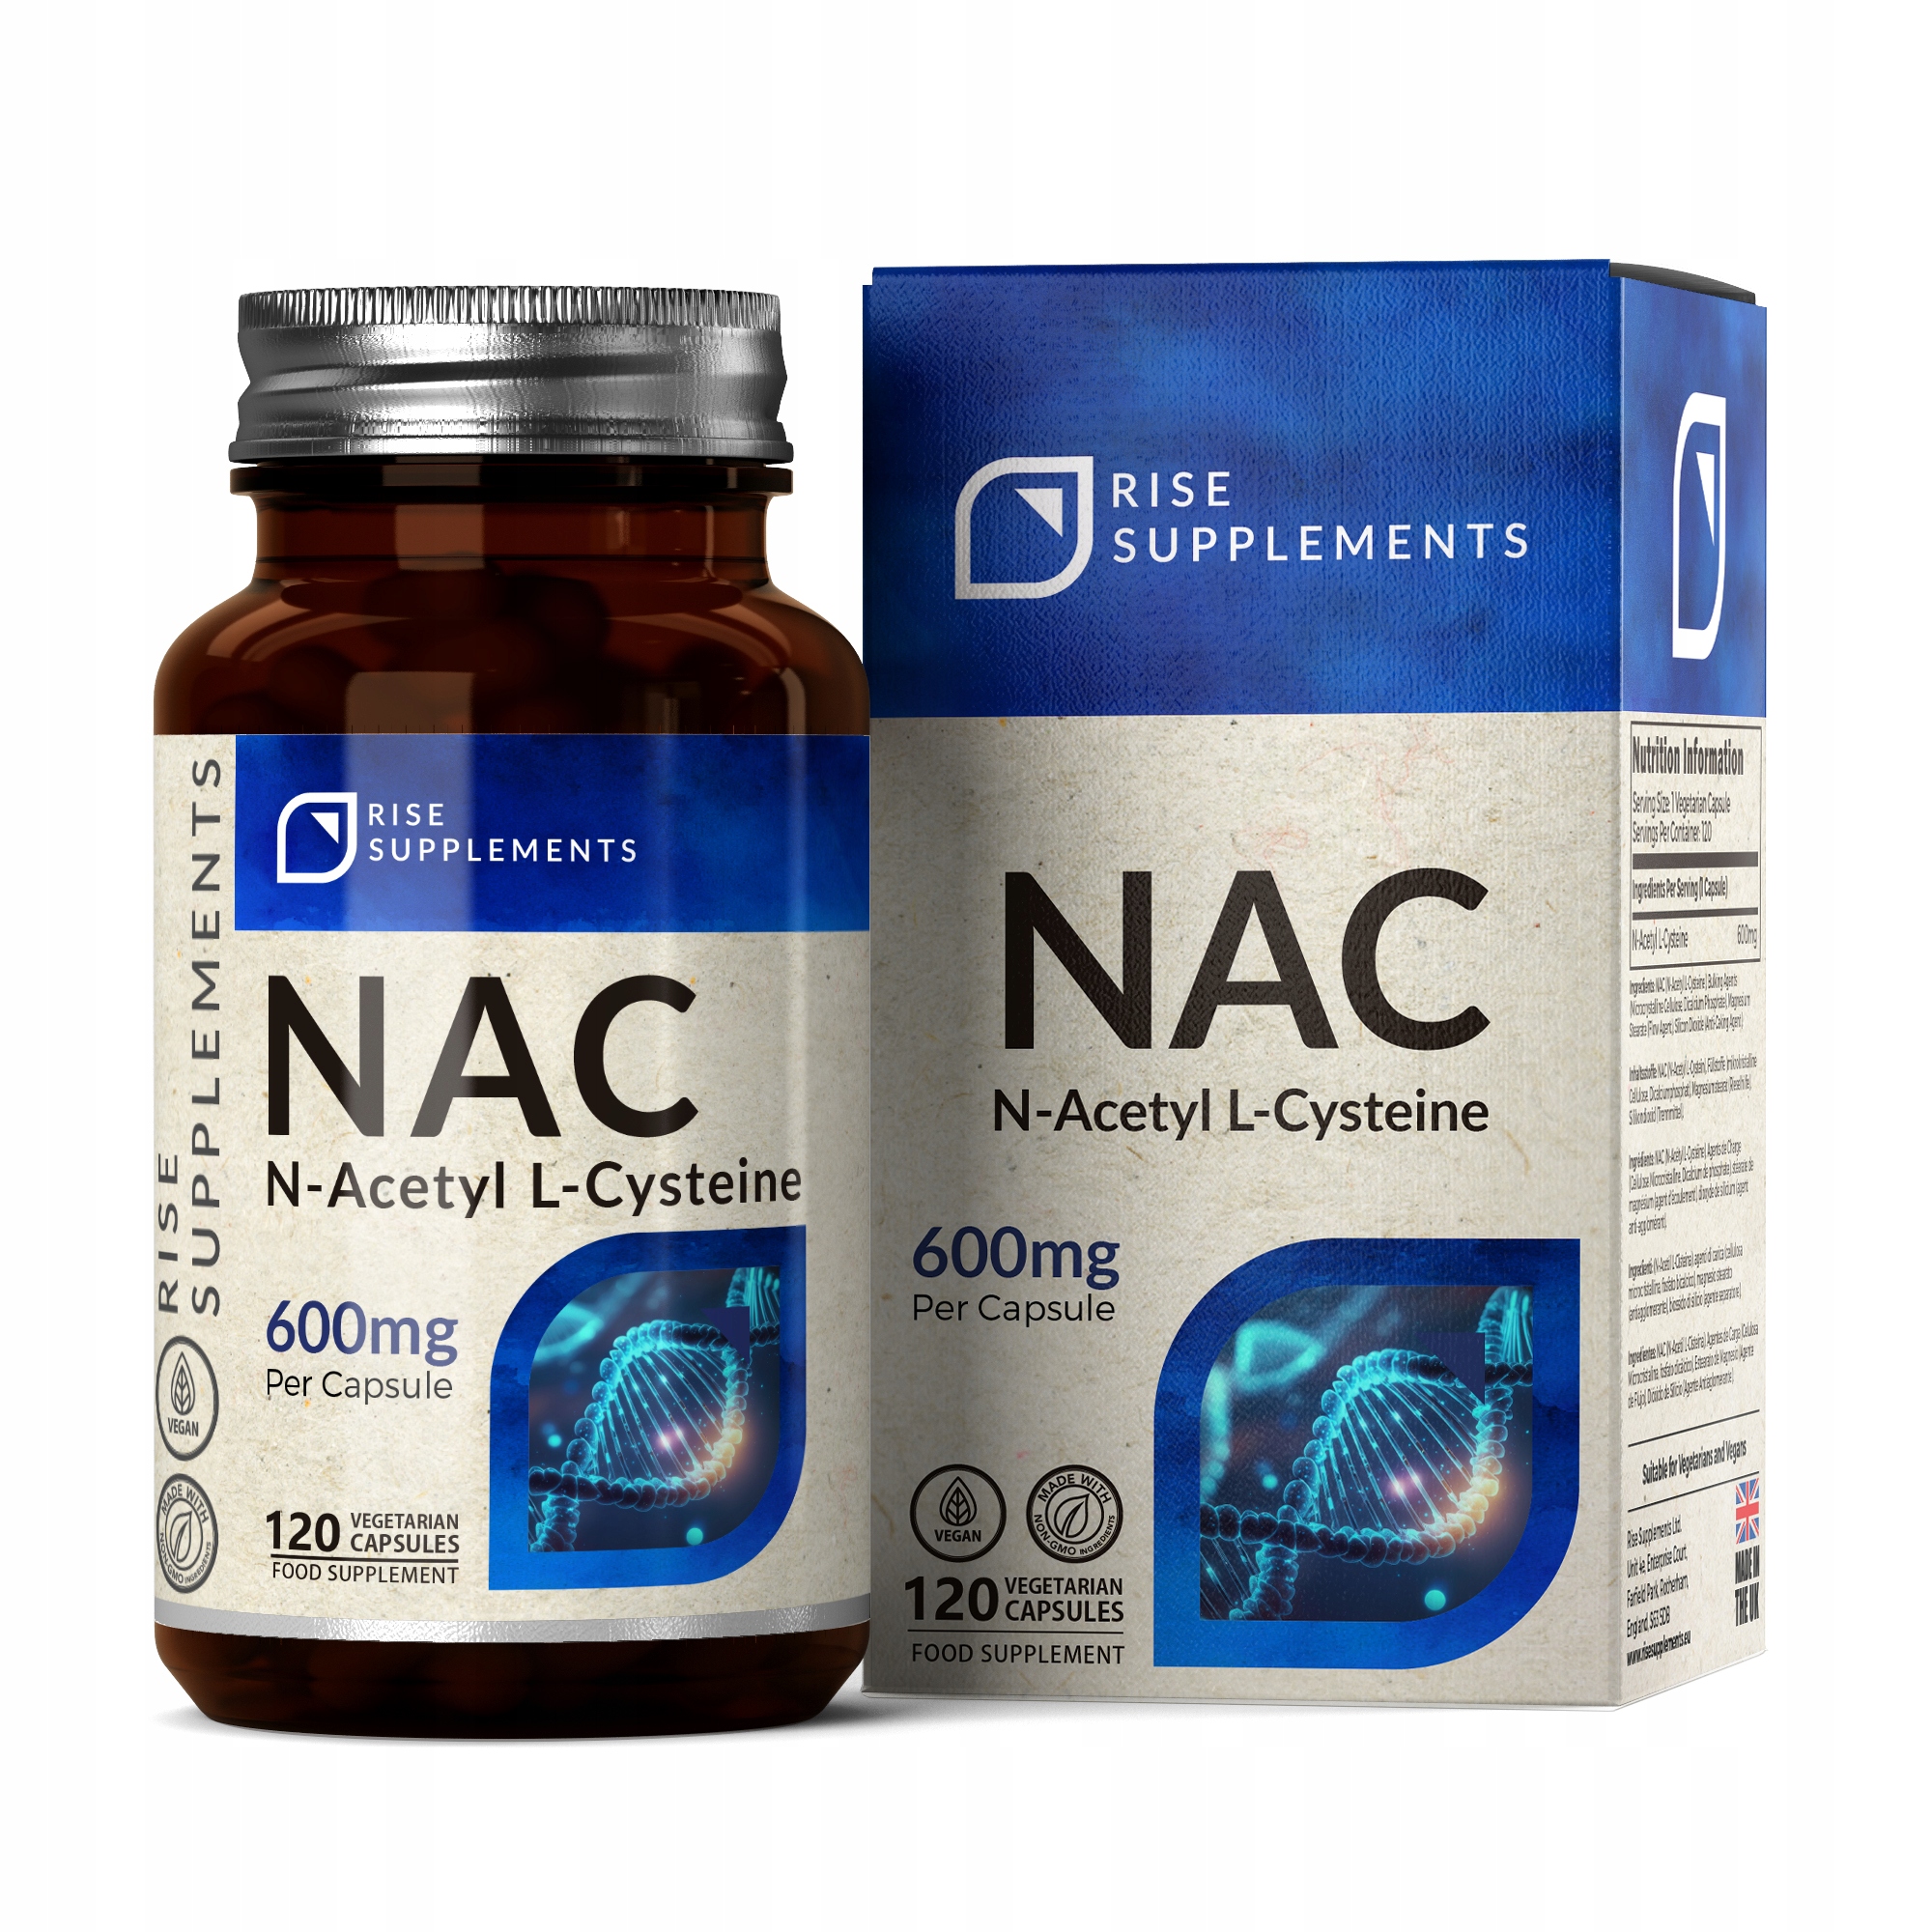 NAC N-Acetyl L-Cysteín 120 kapsúl po 600mg Rise Supplements